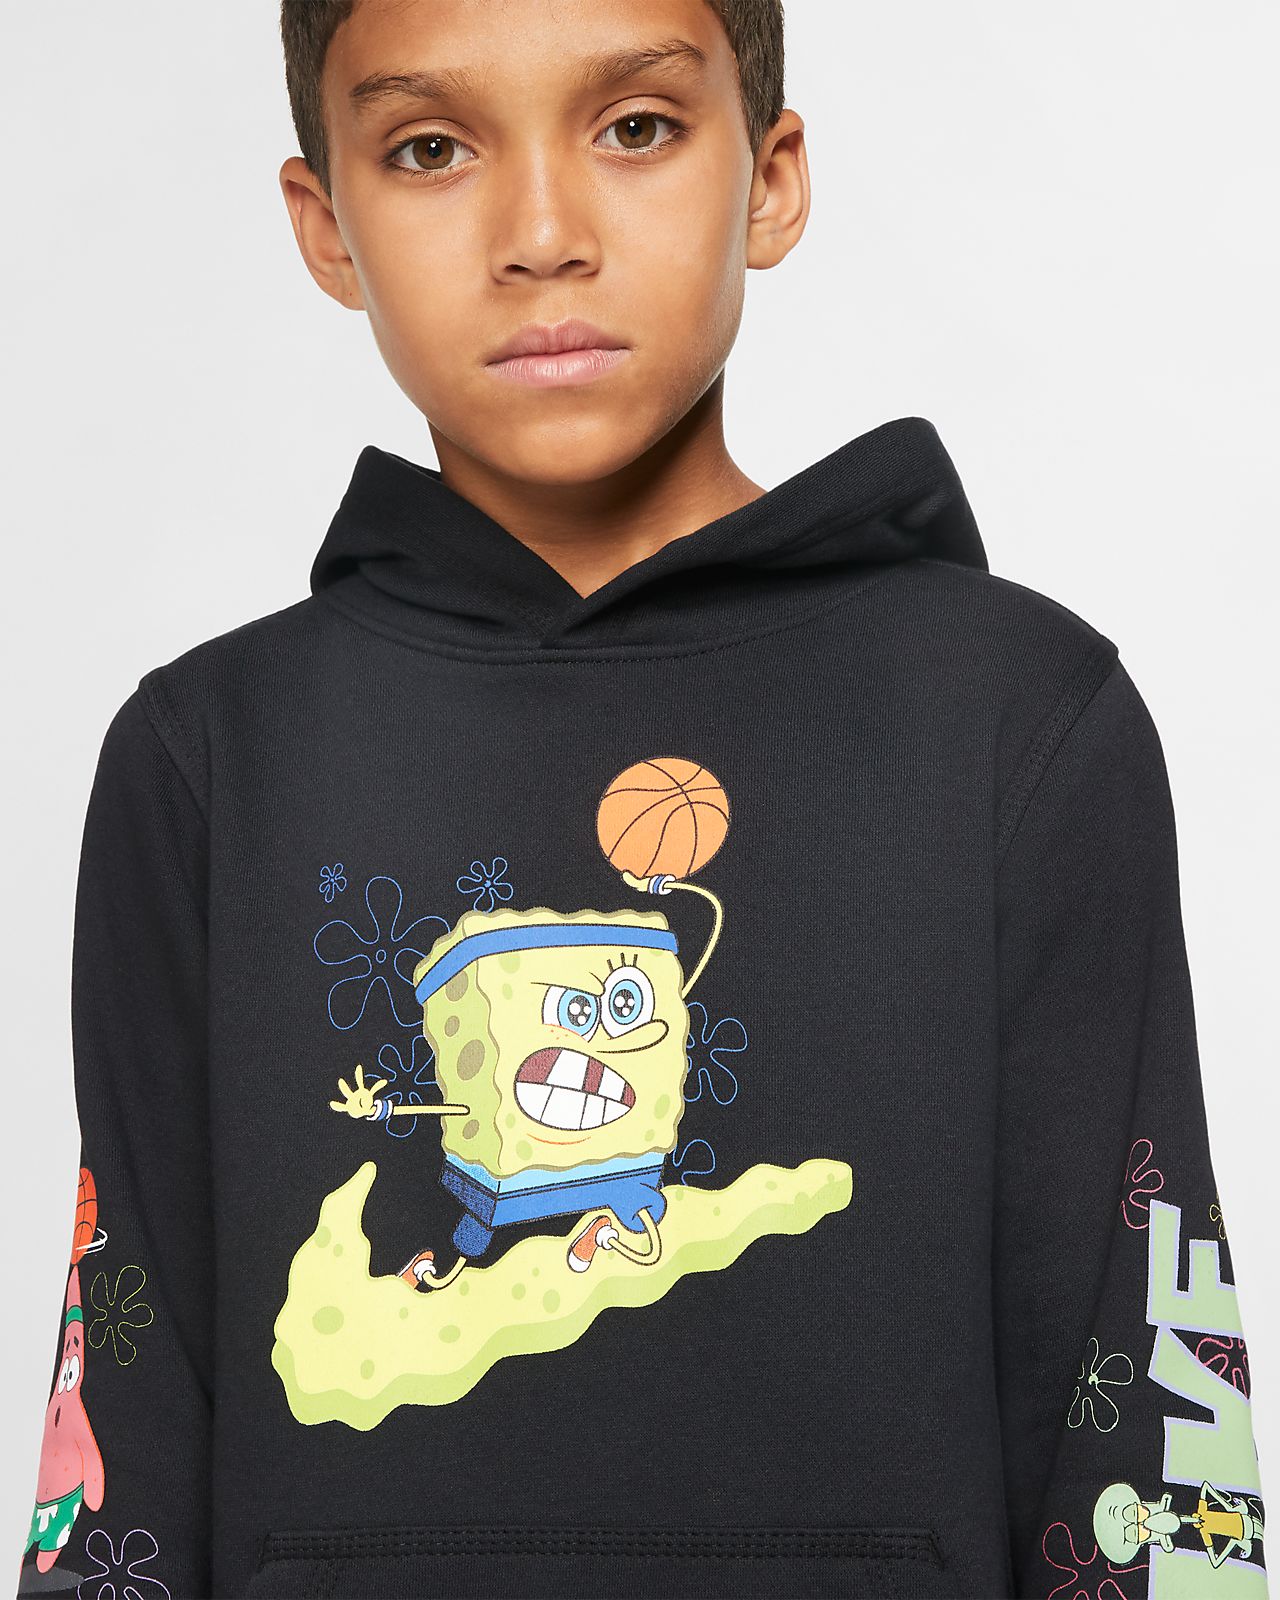 kyrie spongebob sweater